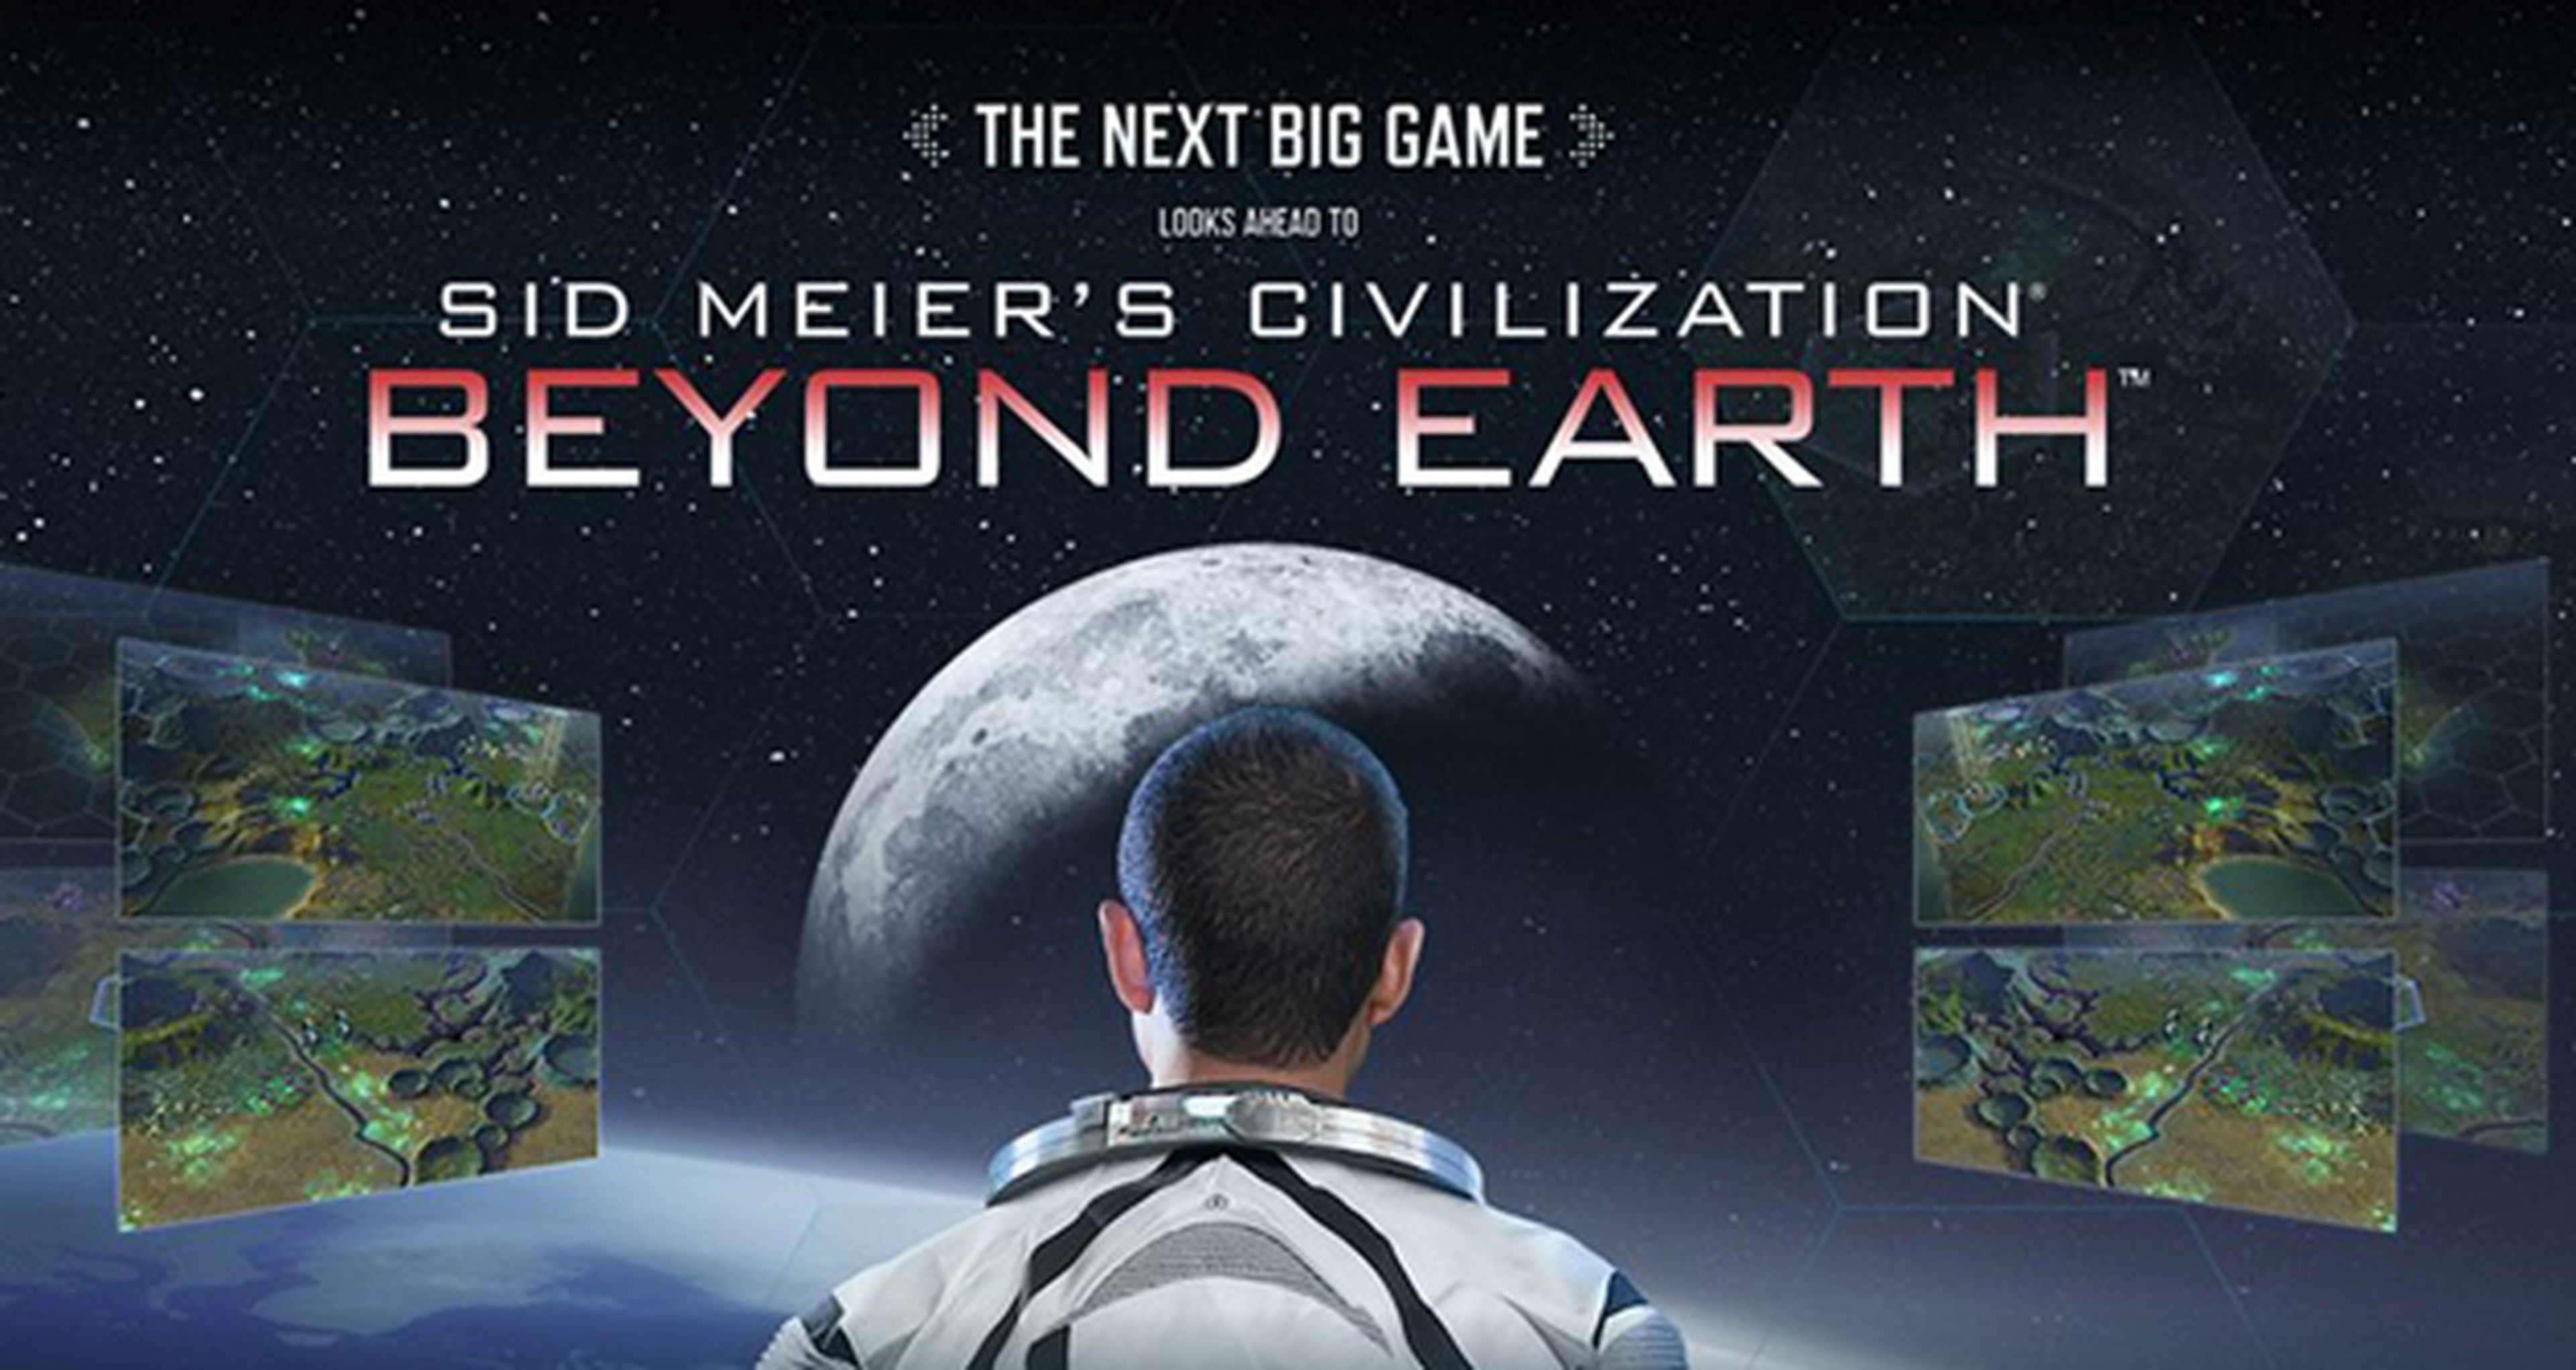 Demo de Civilization Beyond Earth ya disponible en Steam